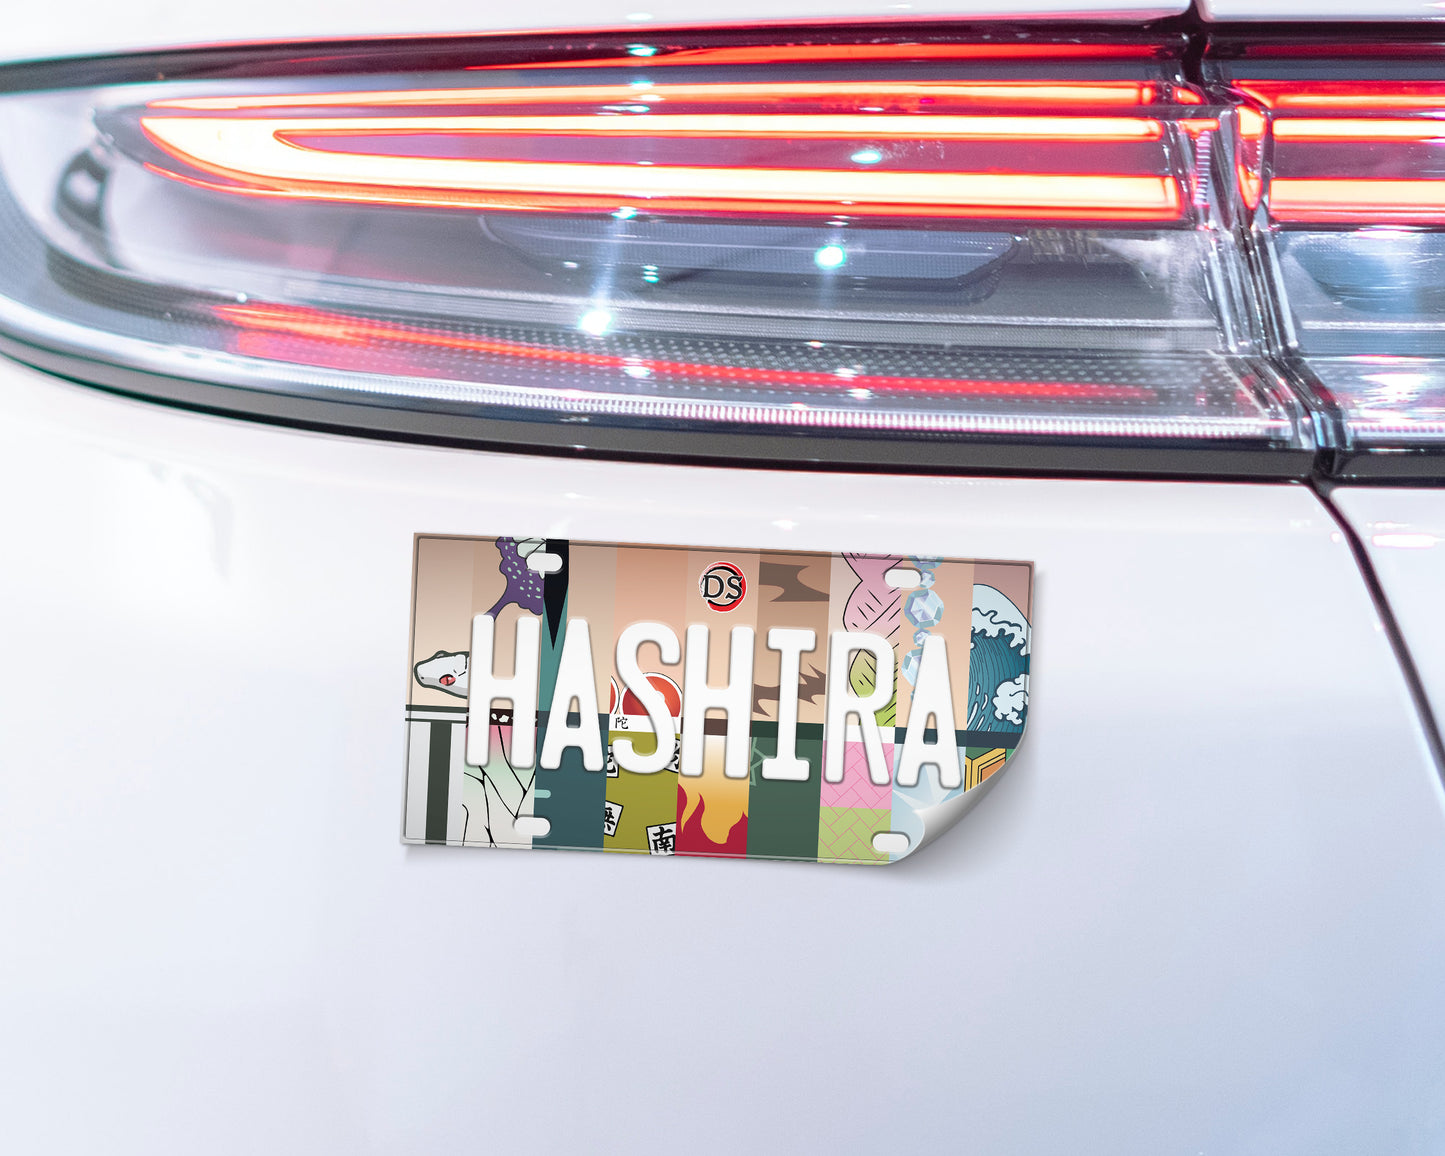 The Hashira bumper sticker